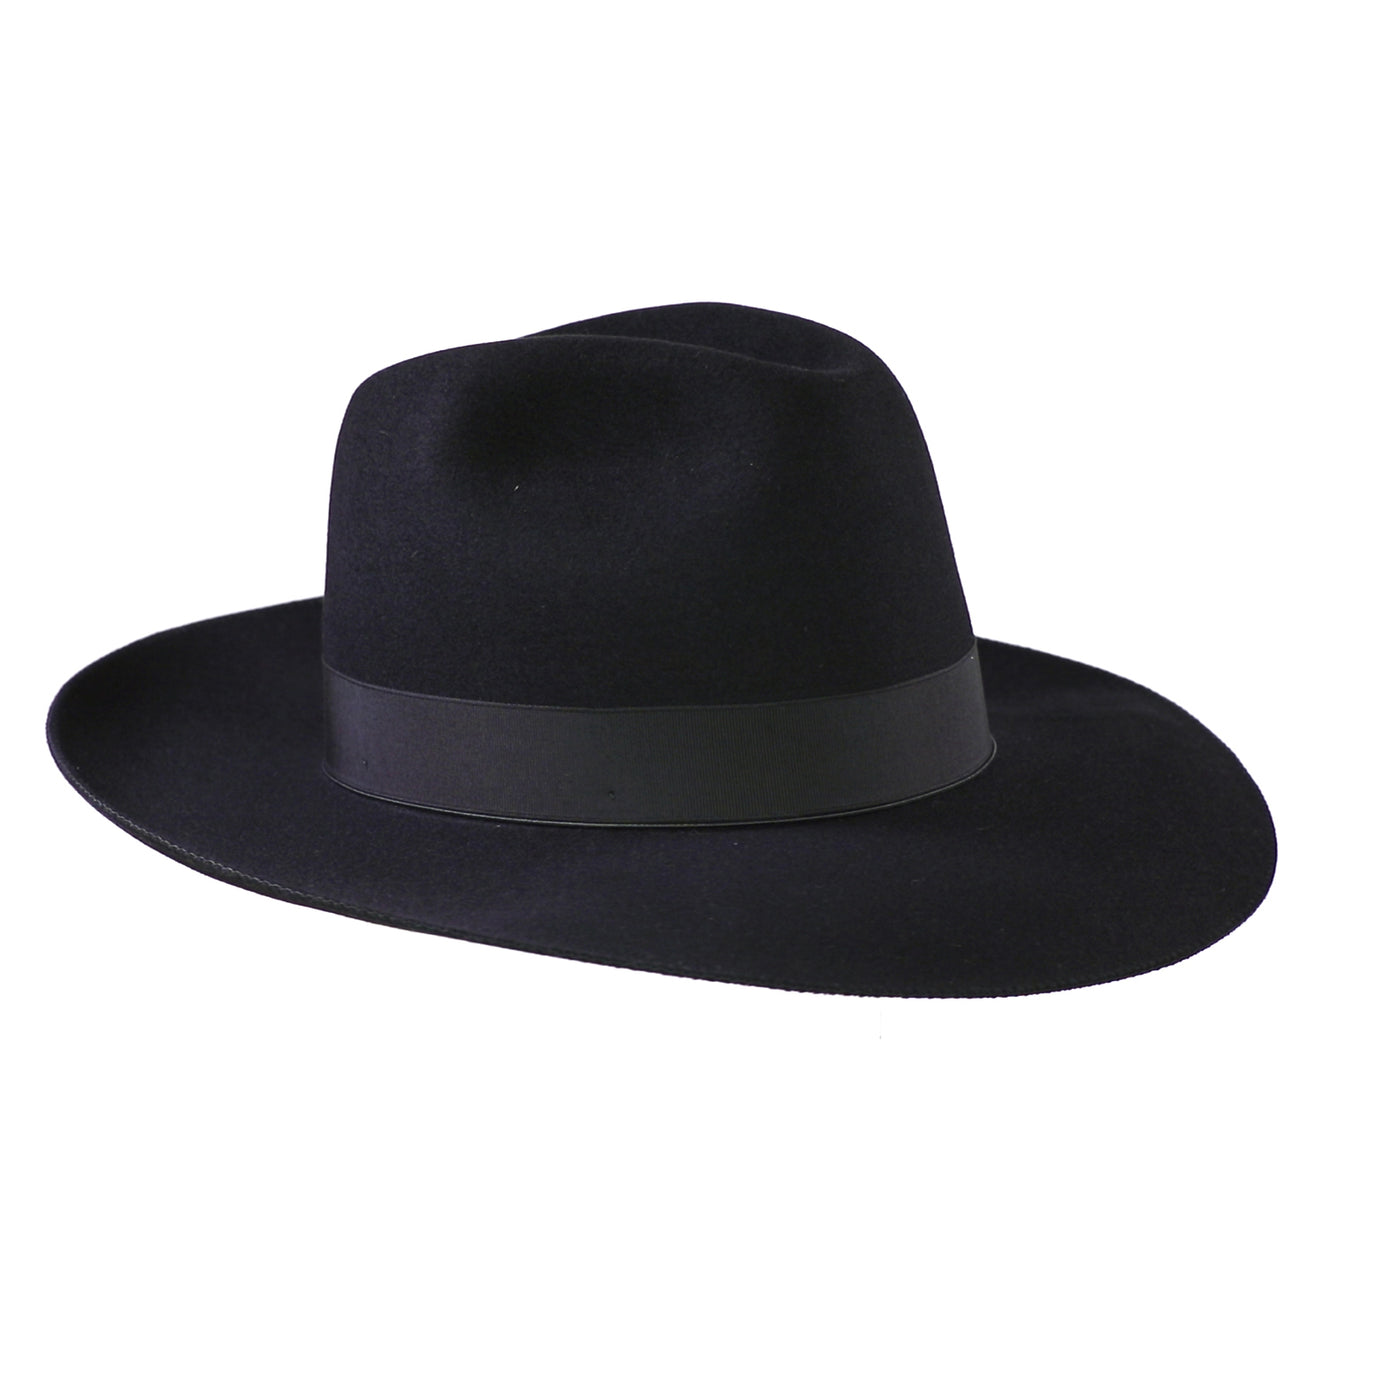 Mattoni 312, product_type] - Borsalino for Atica fedora hat